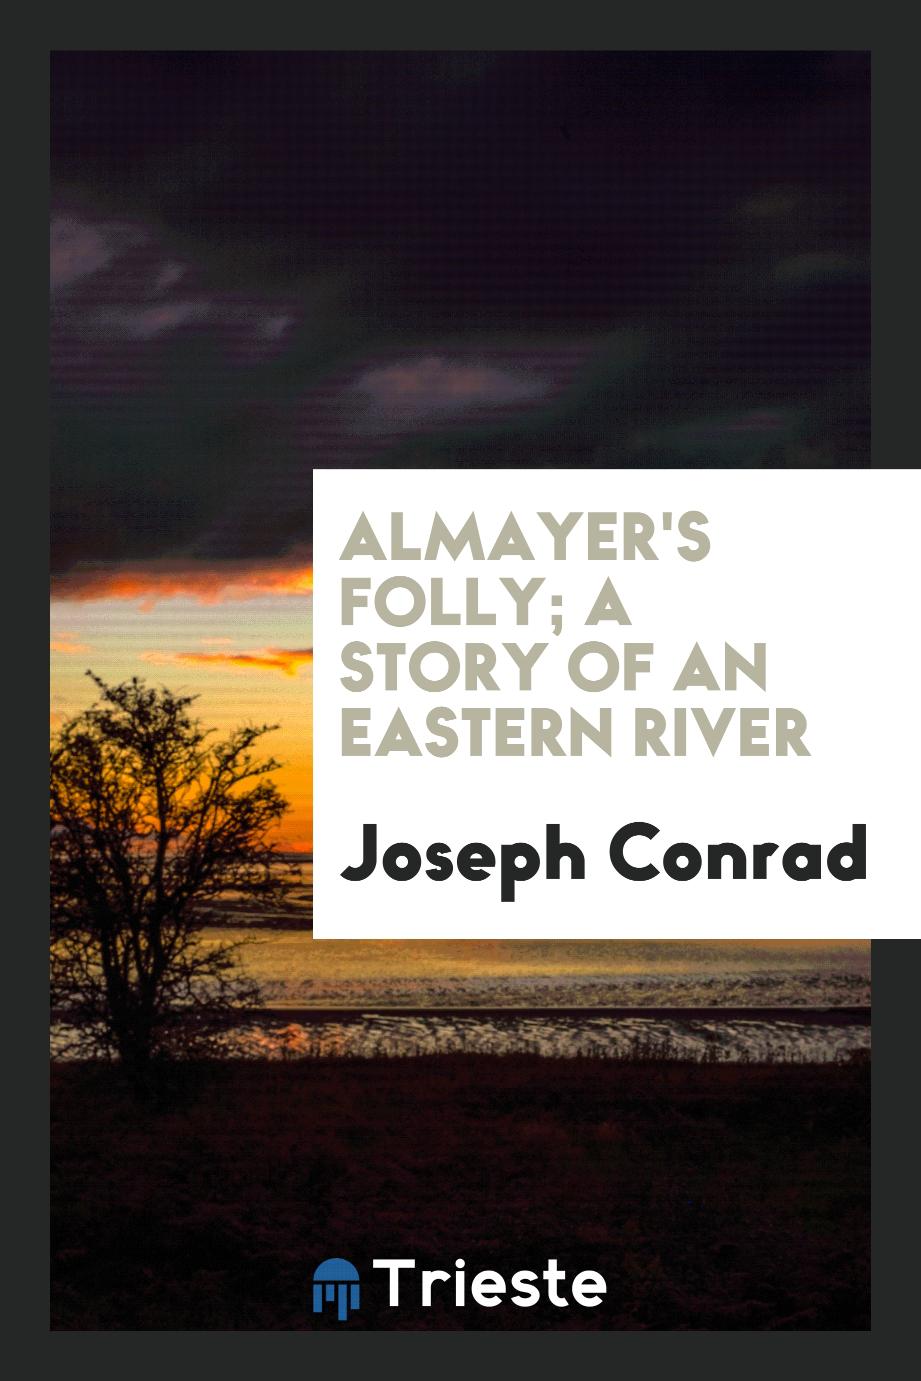 Almayer's folly; a story of an eastern river